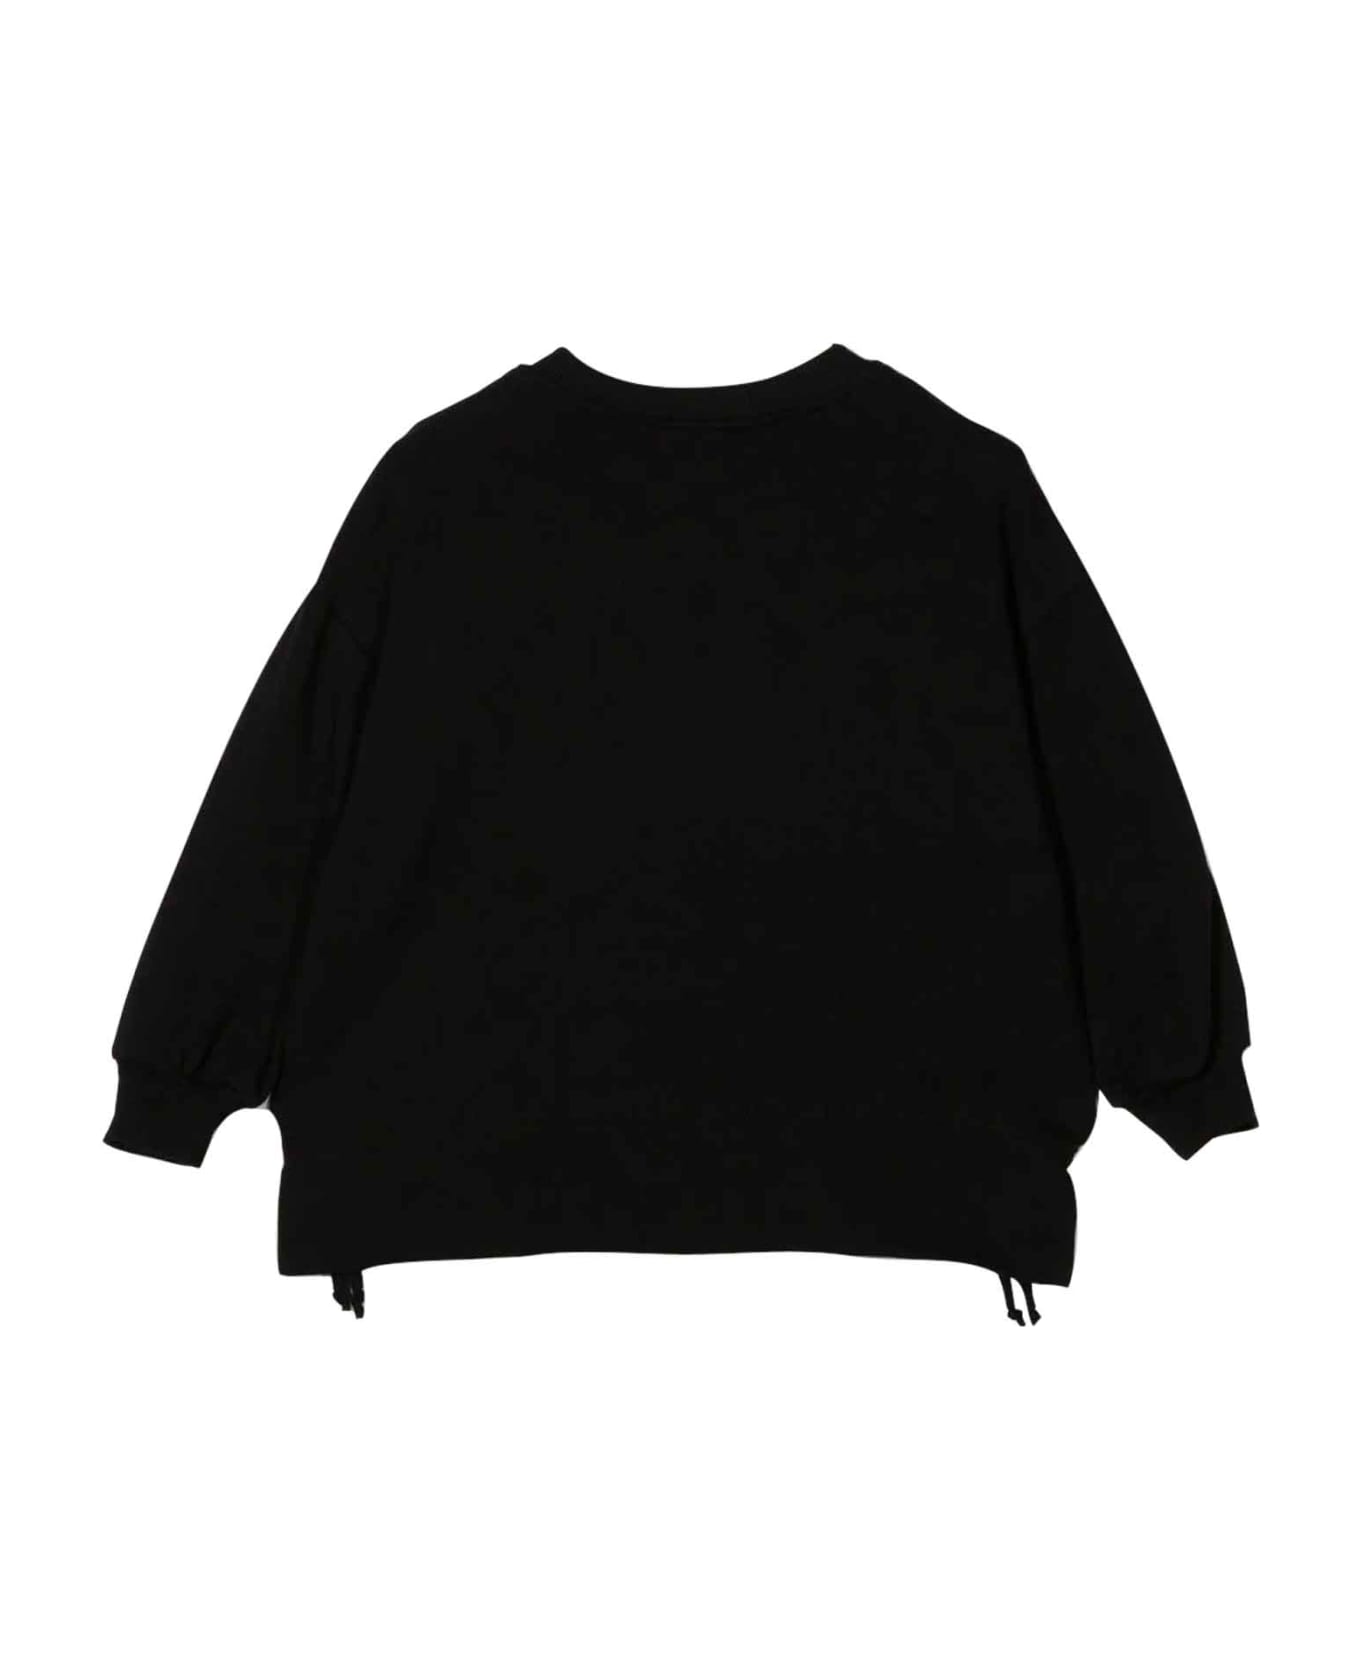 Chiara Ferragni Black Sweatshirt Girl - BLACK